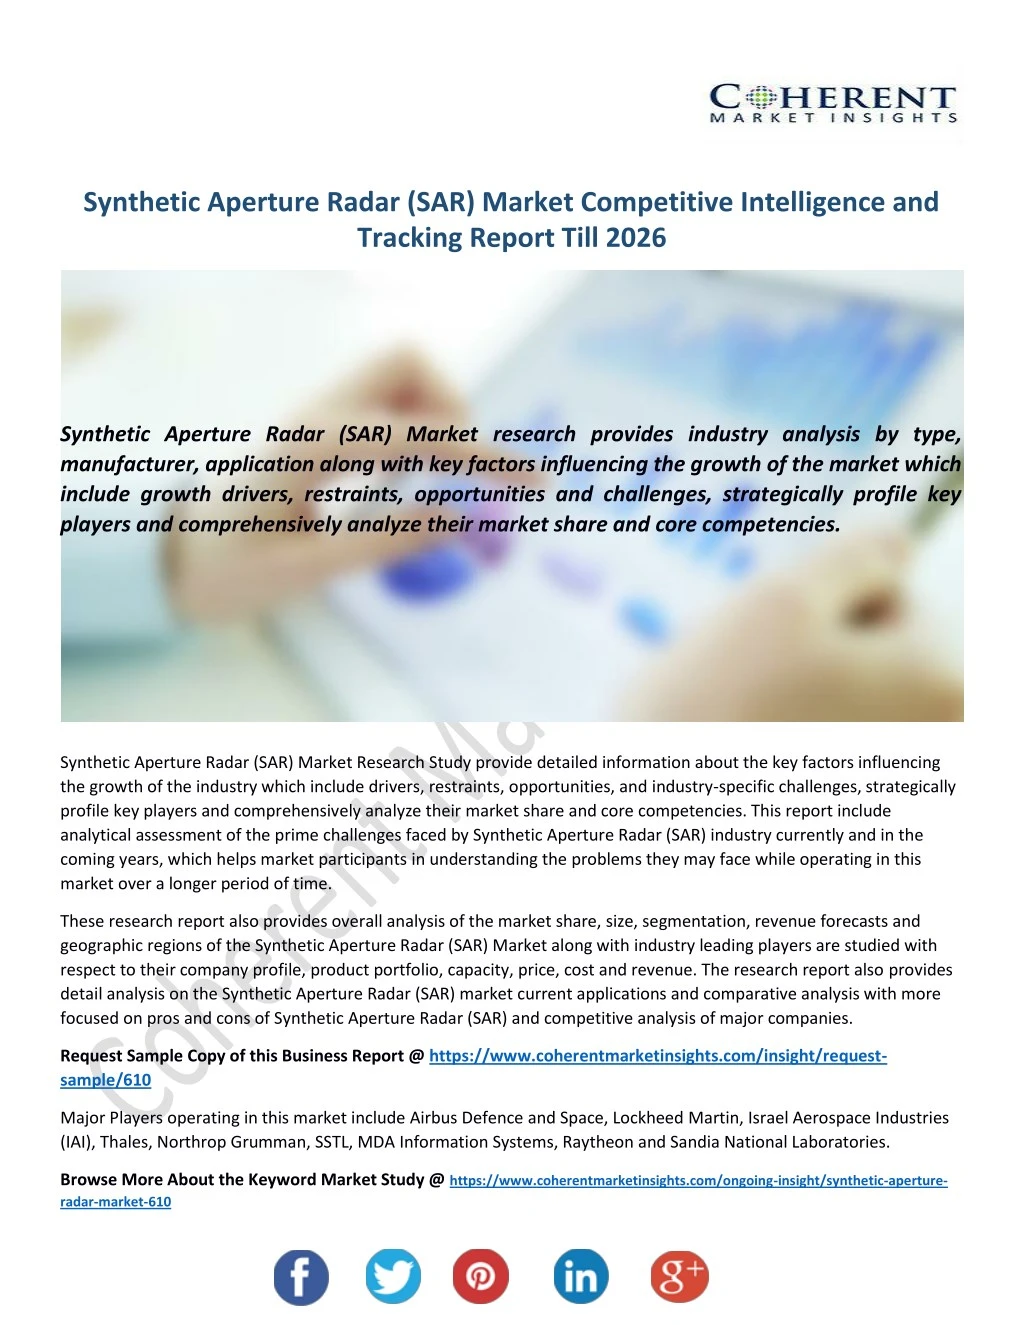 PPT - Synthetic Aperture Radar (SAR) Market Competitive Intelligence ...